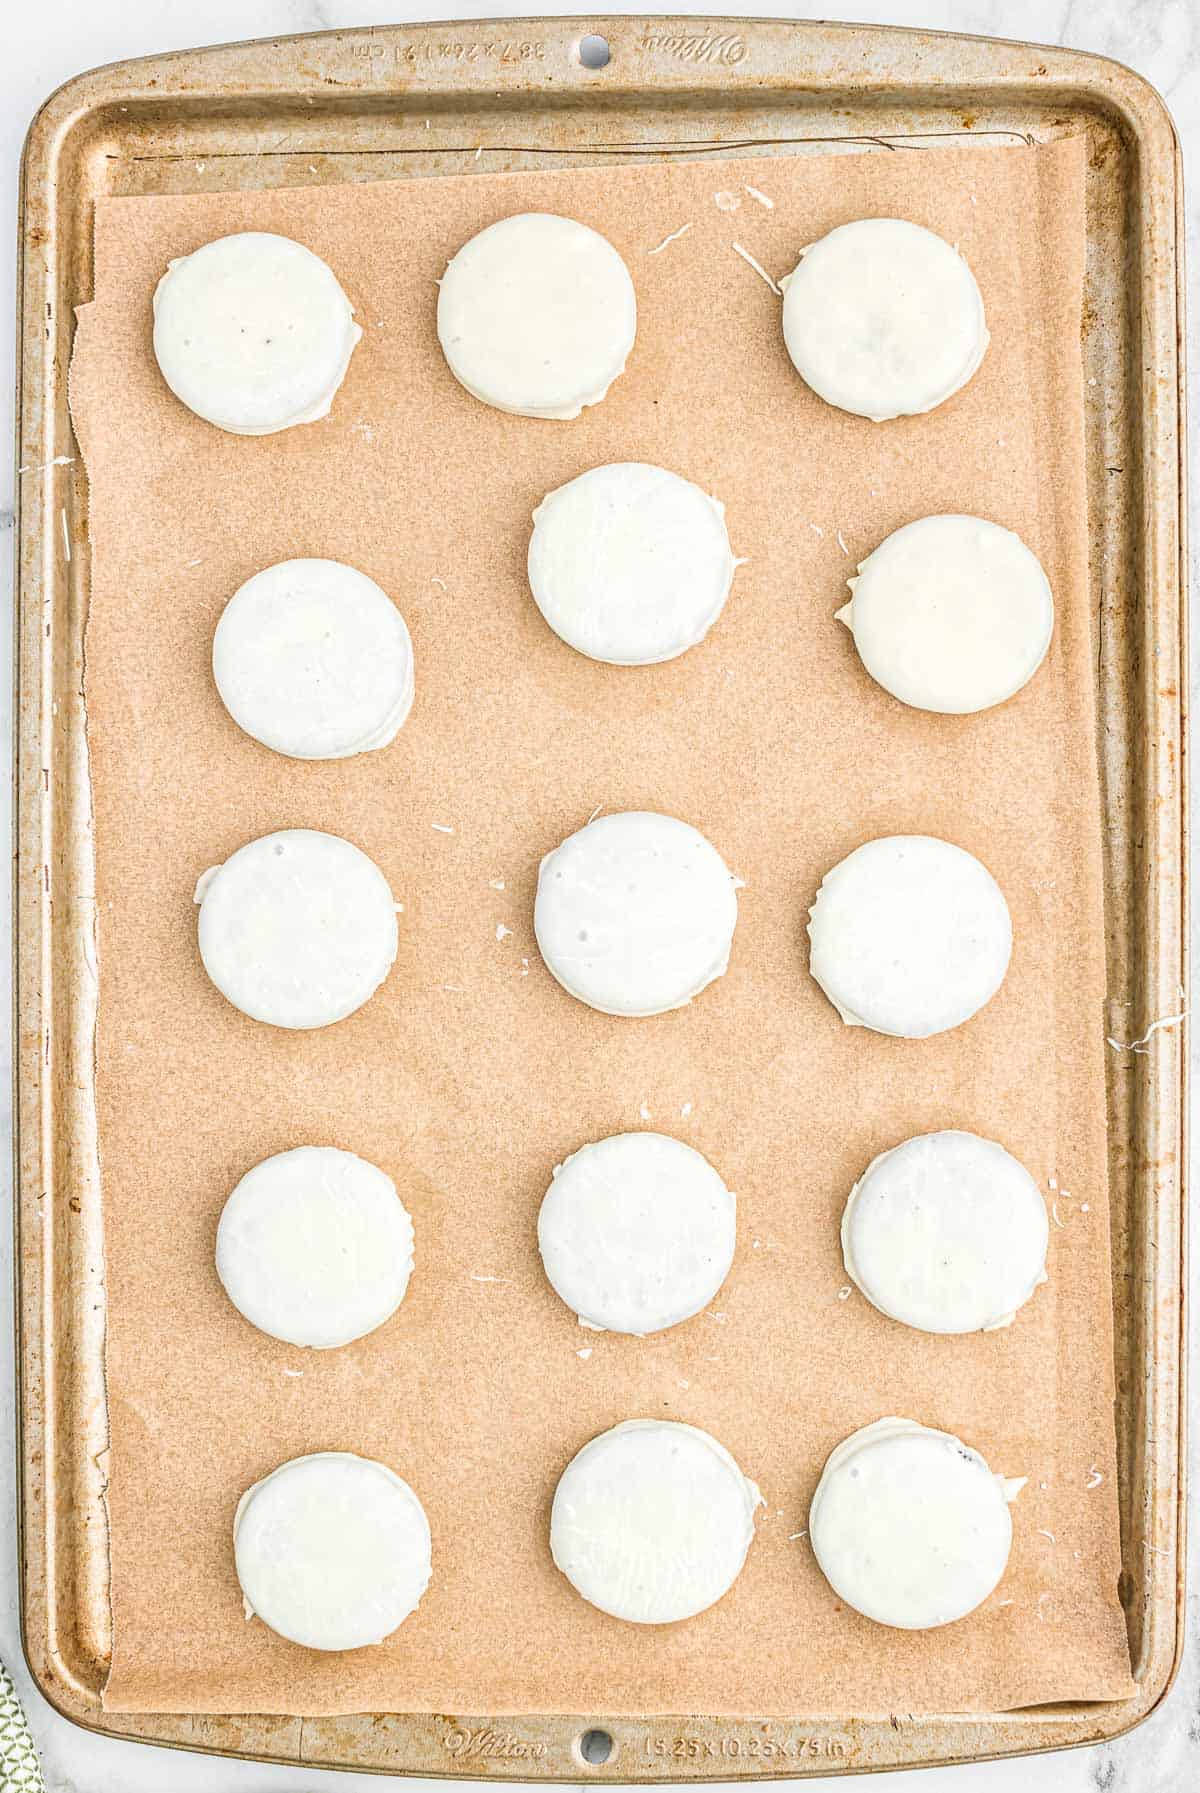 white chocolate coated Oreos on a lined baking sheet